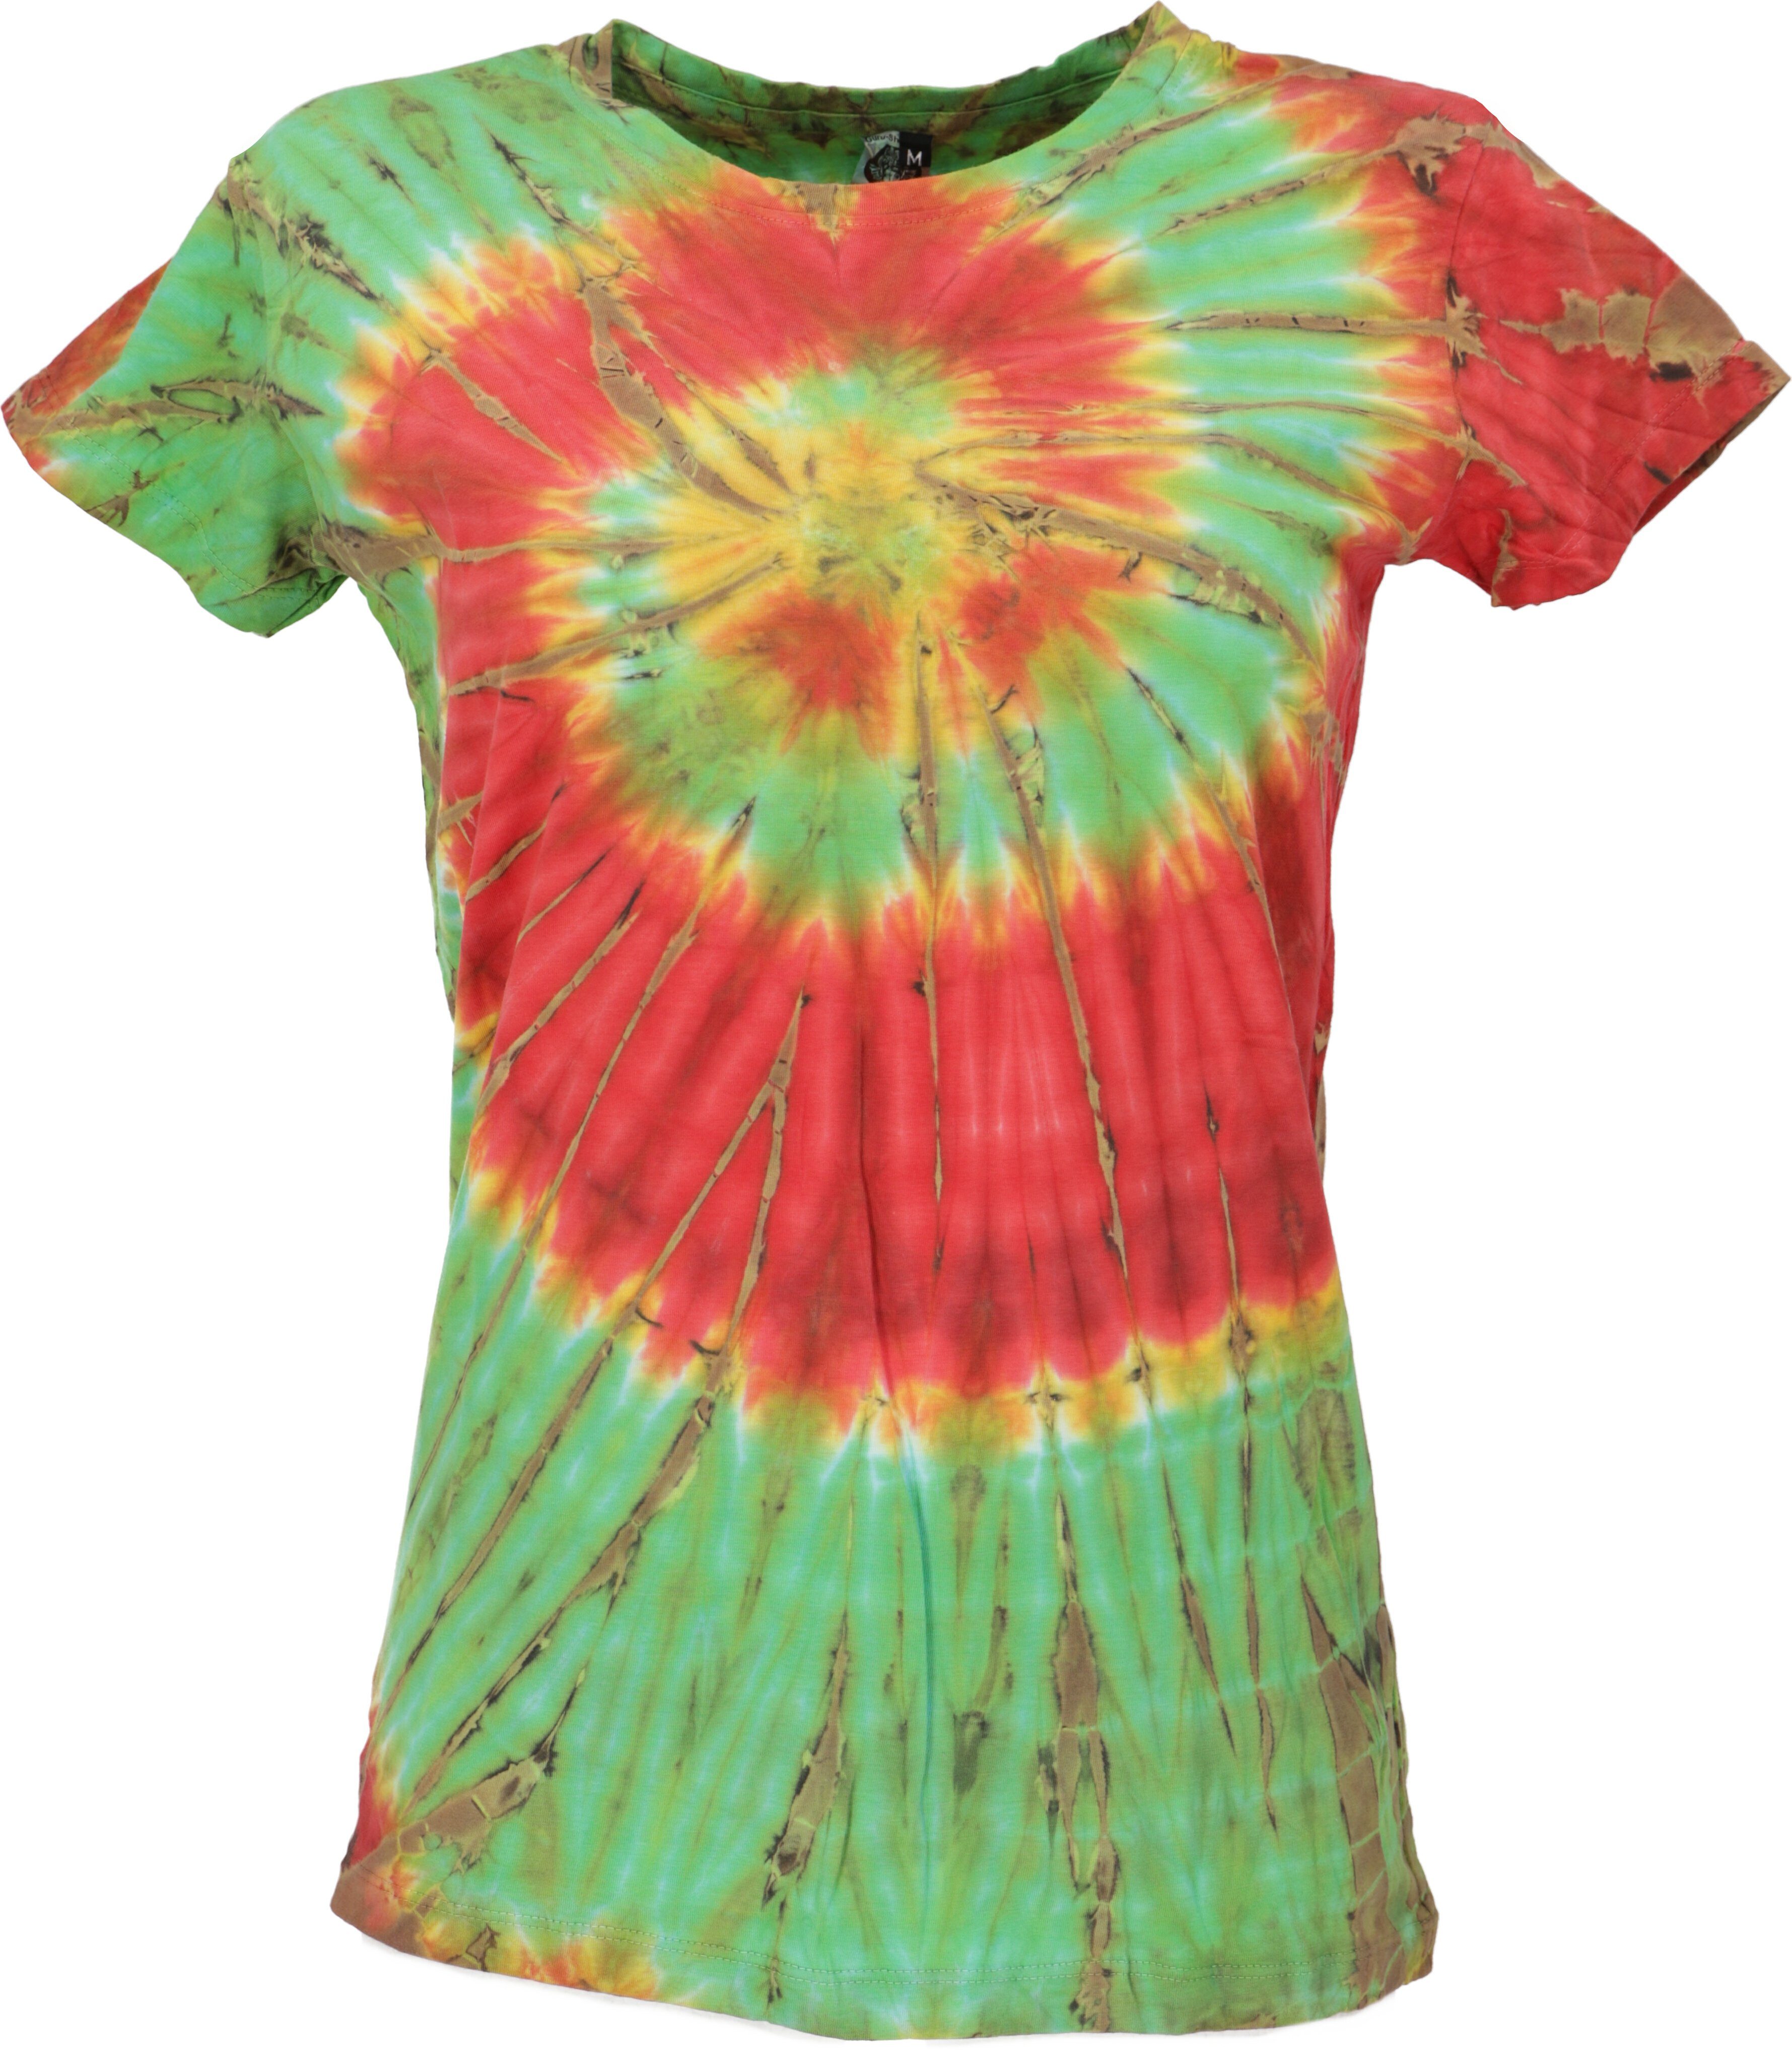 Guru-Shop T-Shirt »Batik T-Shirt für Damen, Tie Dye Goa Shirt -..«  alternative Bekleidung, Festival, Ethno Style, Hippie